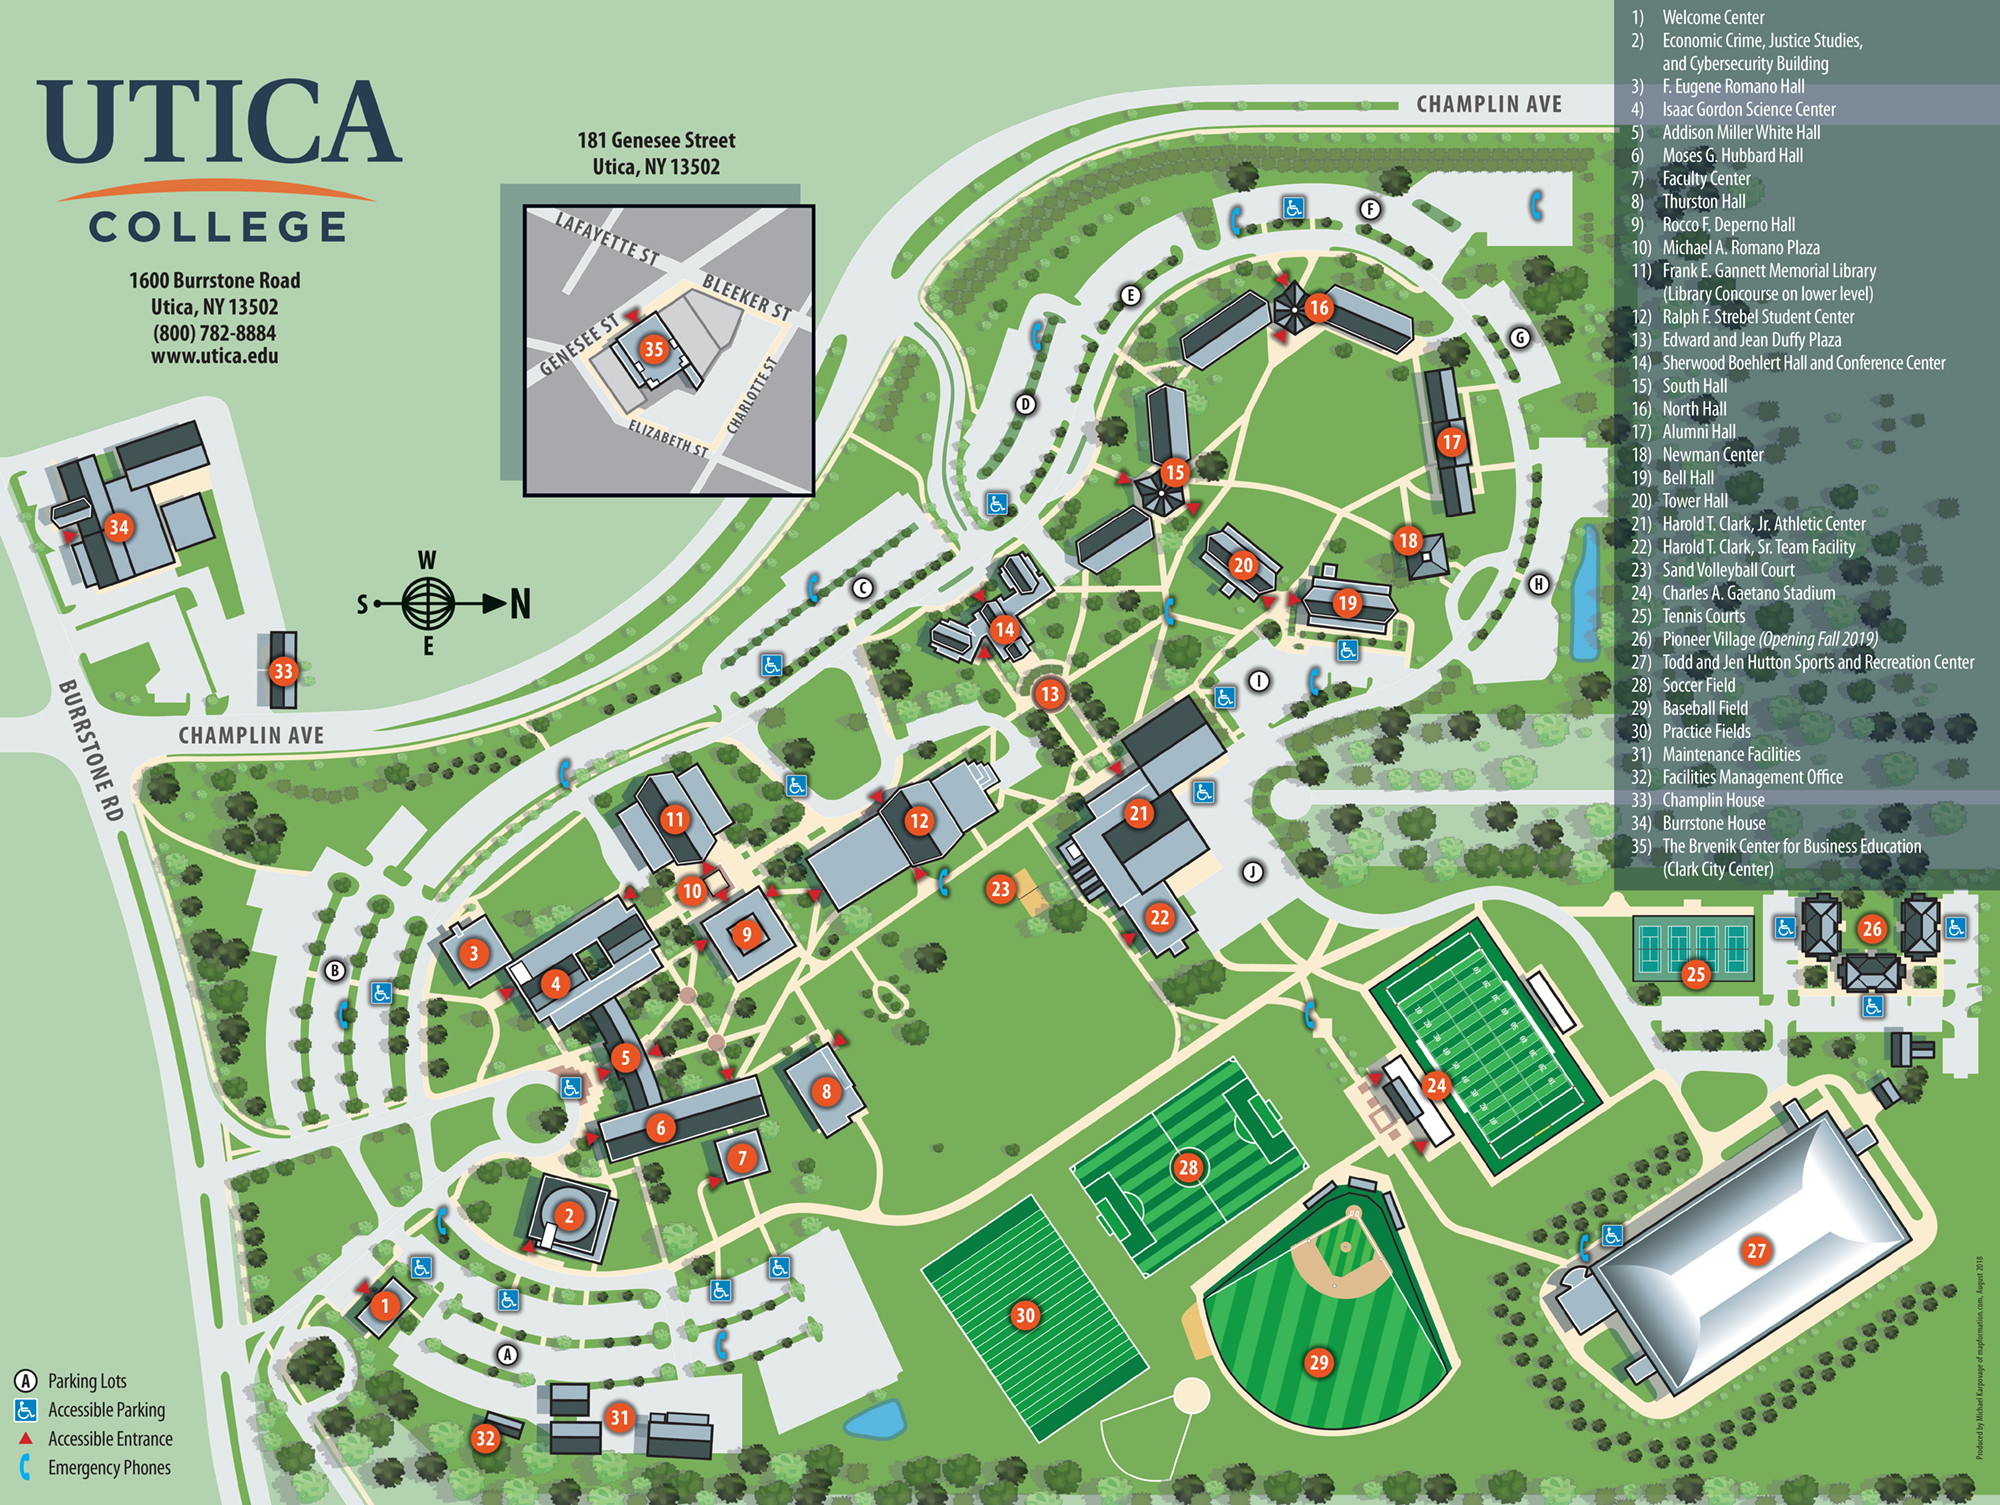 St. John's Campus Map